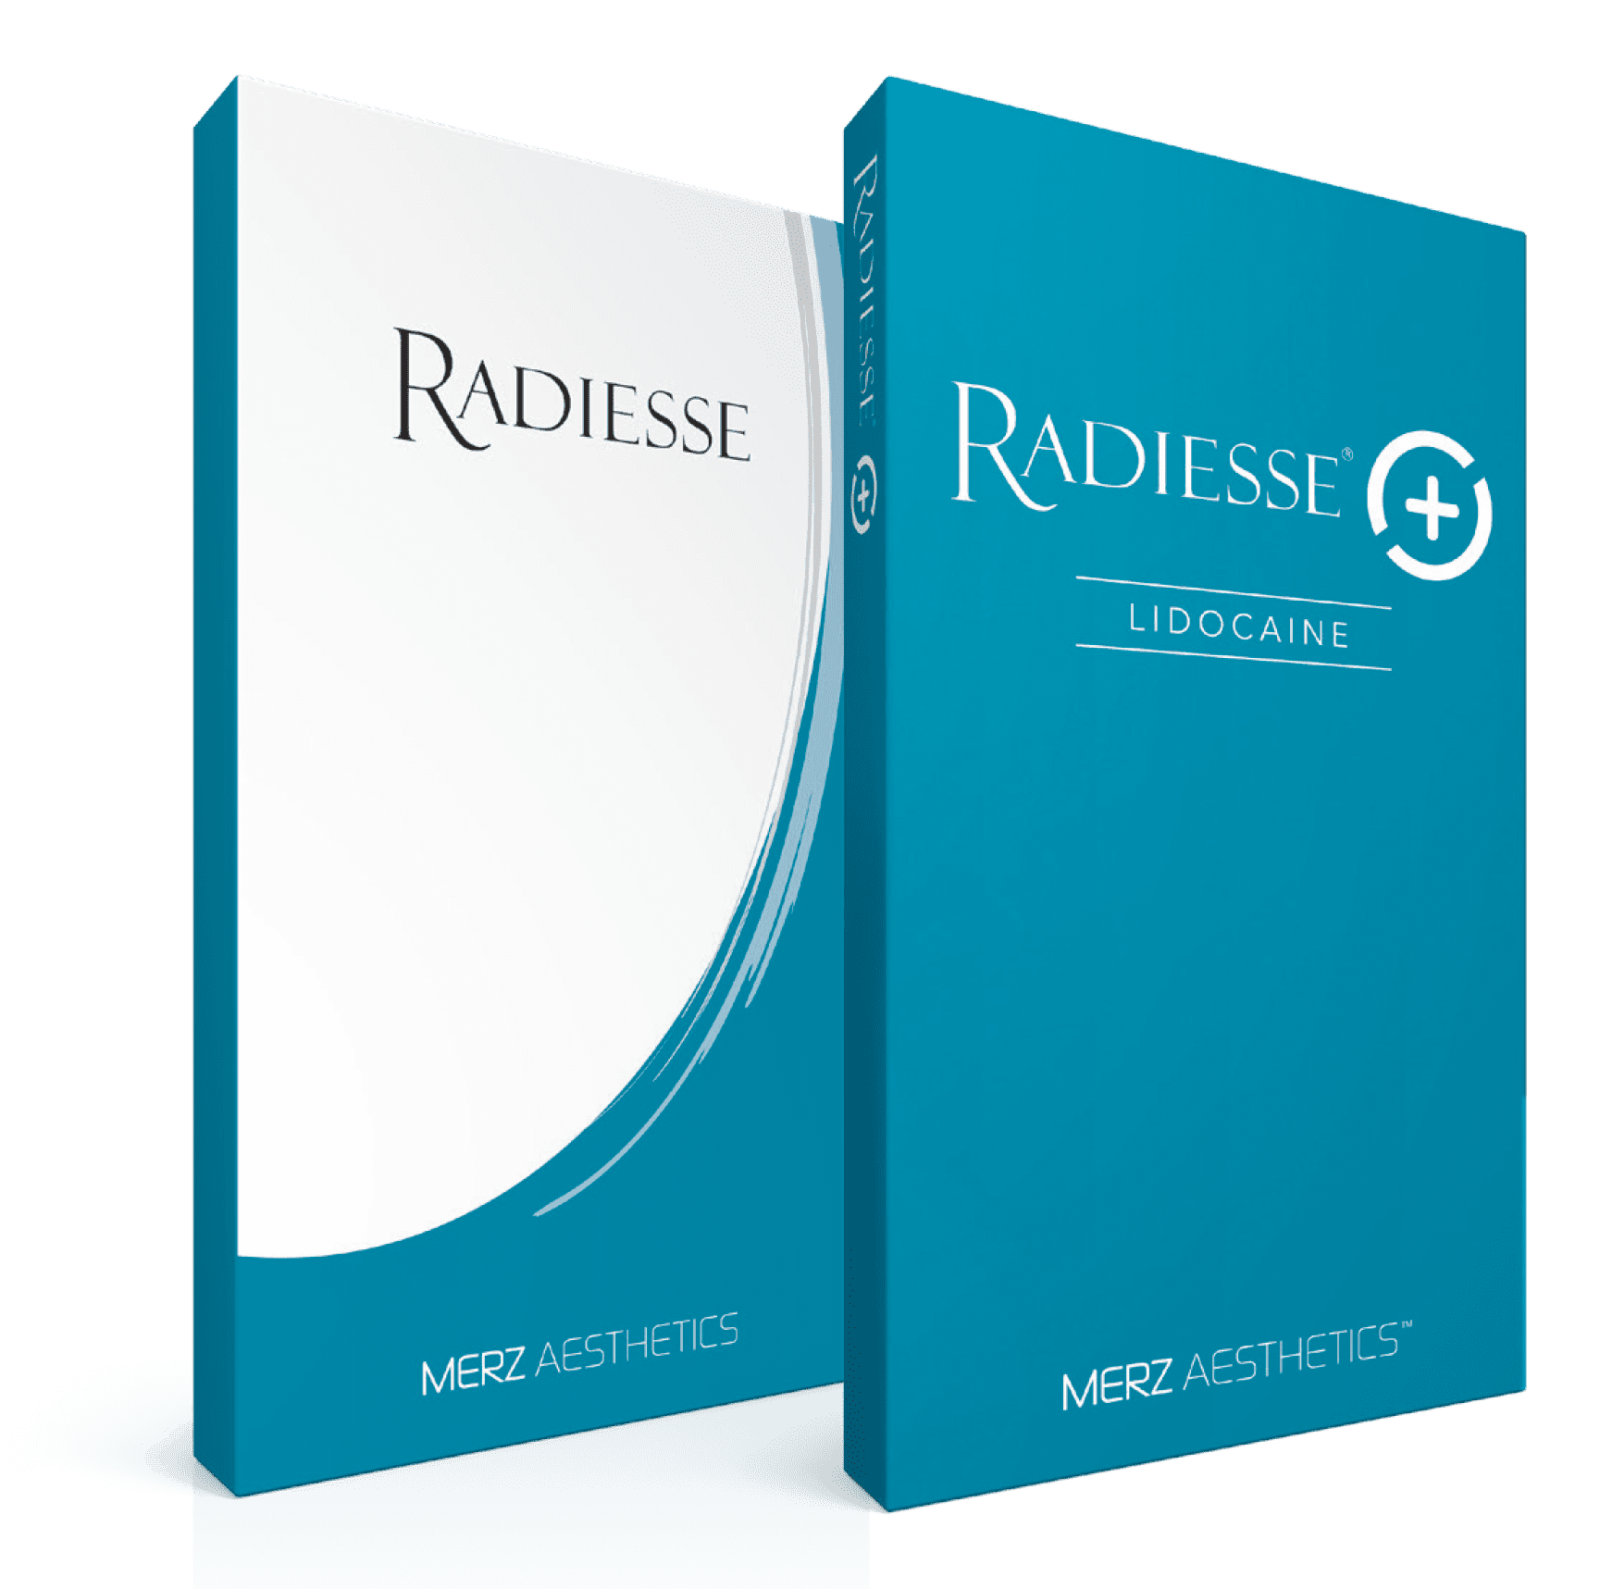 Radiesse product